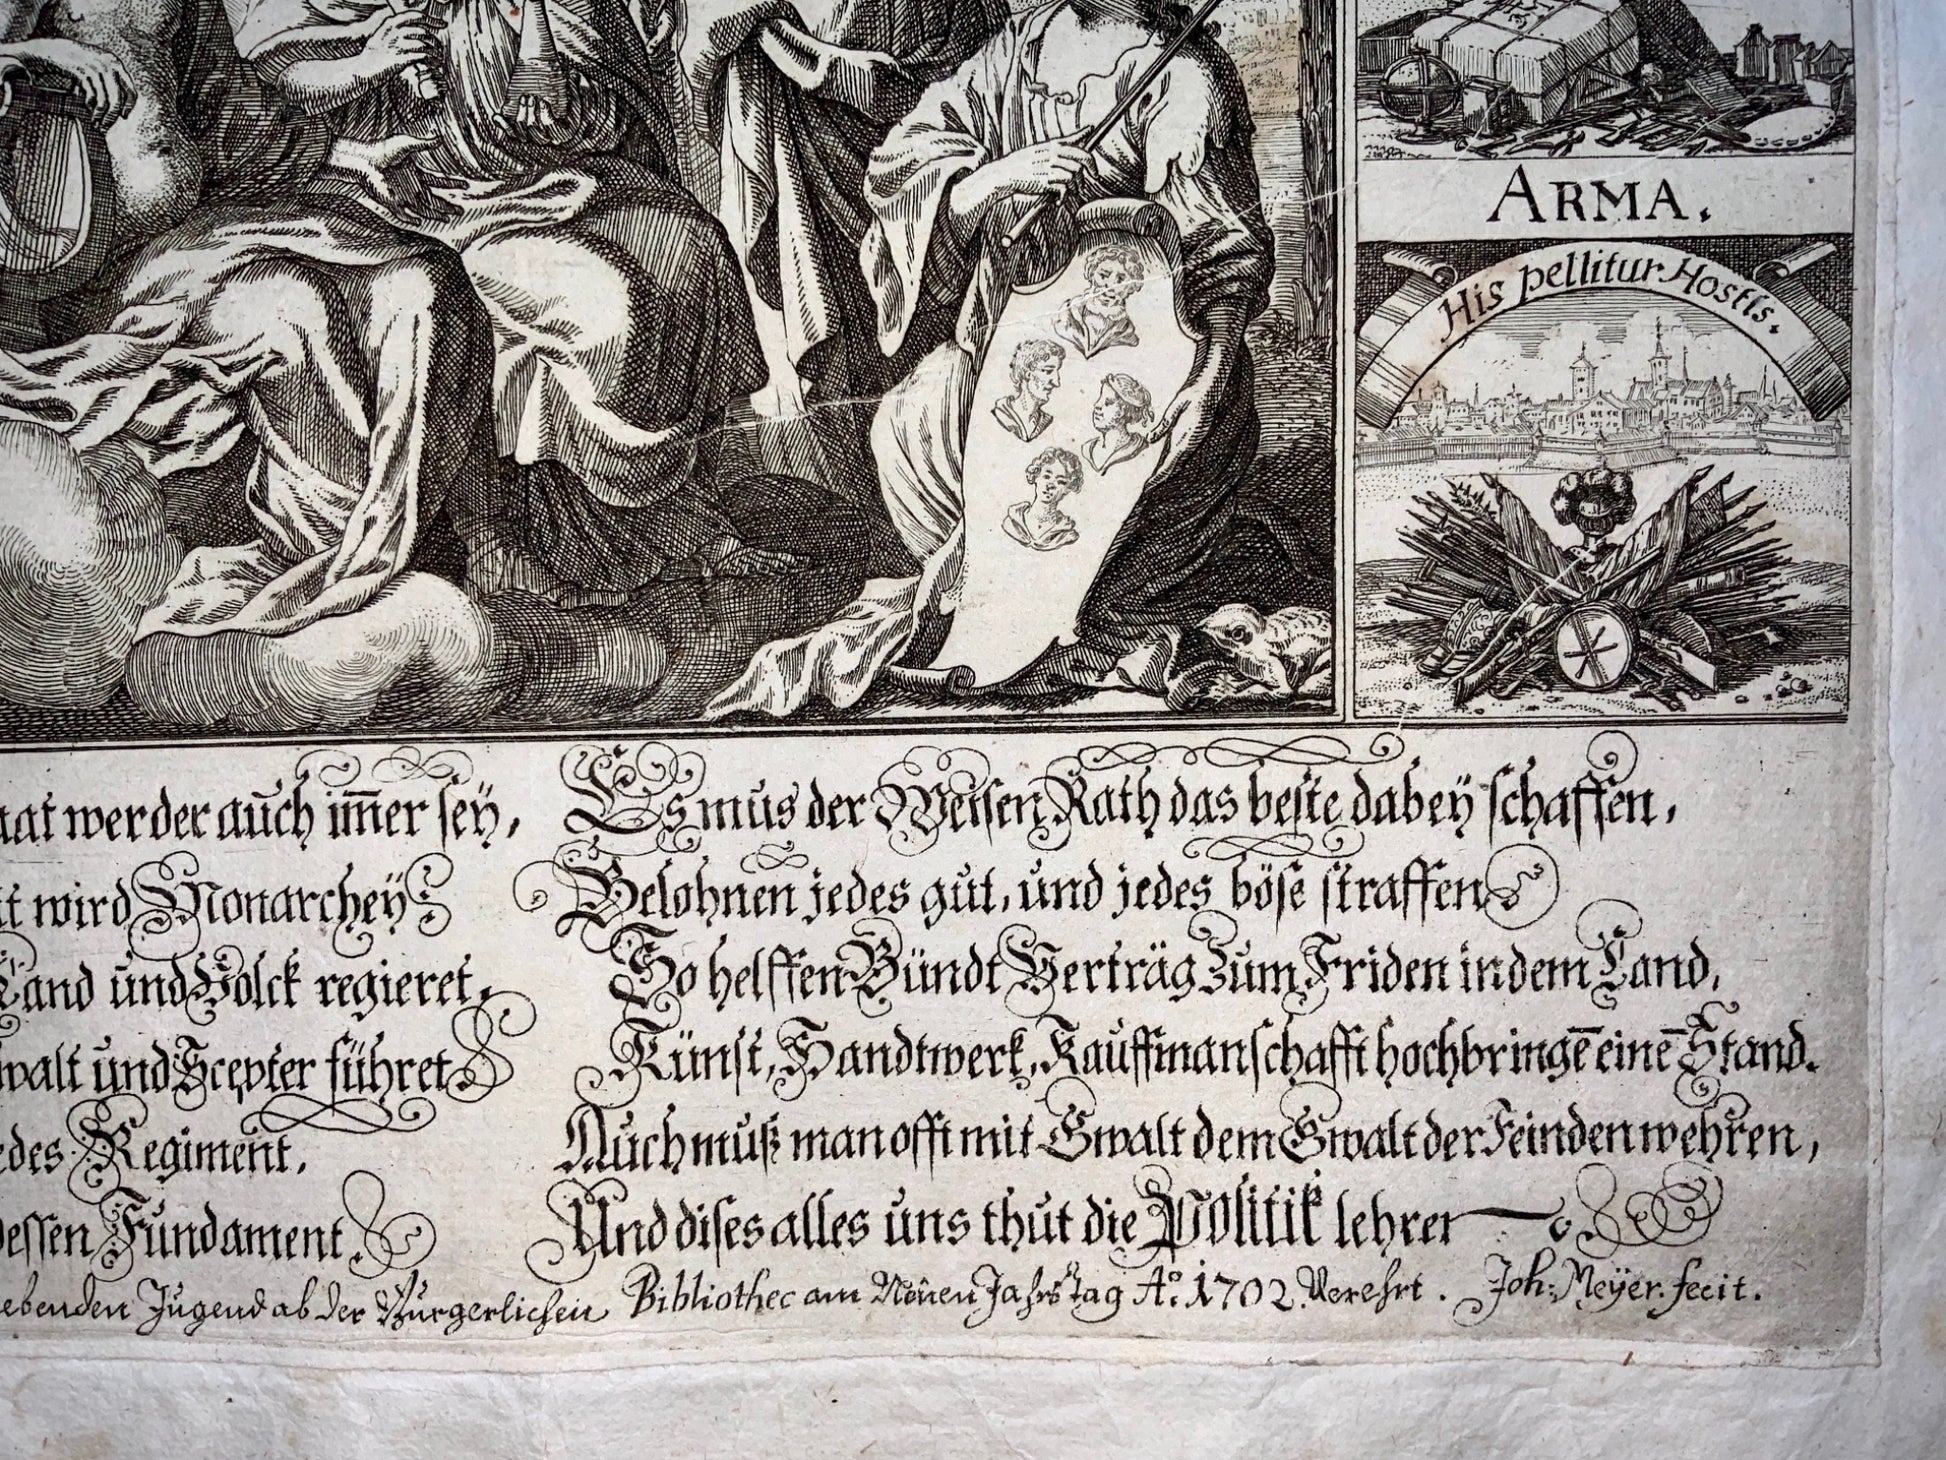 1702 Broadside [Einblattdruck] - POLITICA - The ‘Art’ of Politics Johannes Meyer - Politics & Government